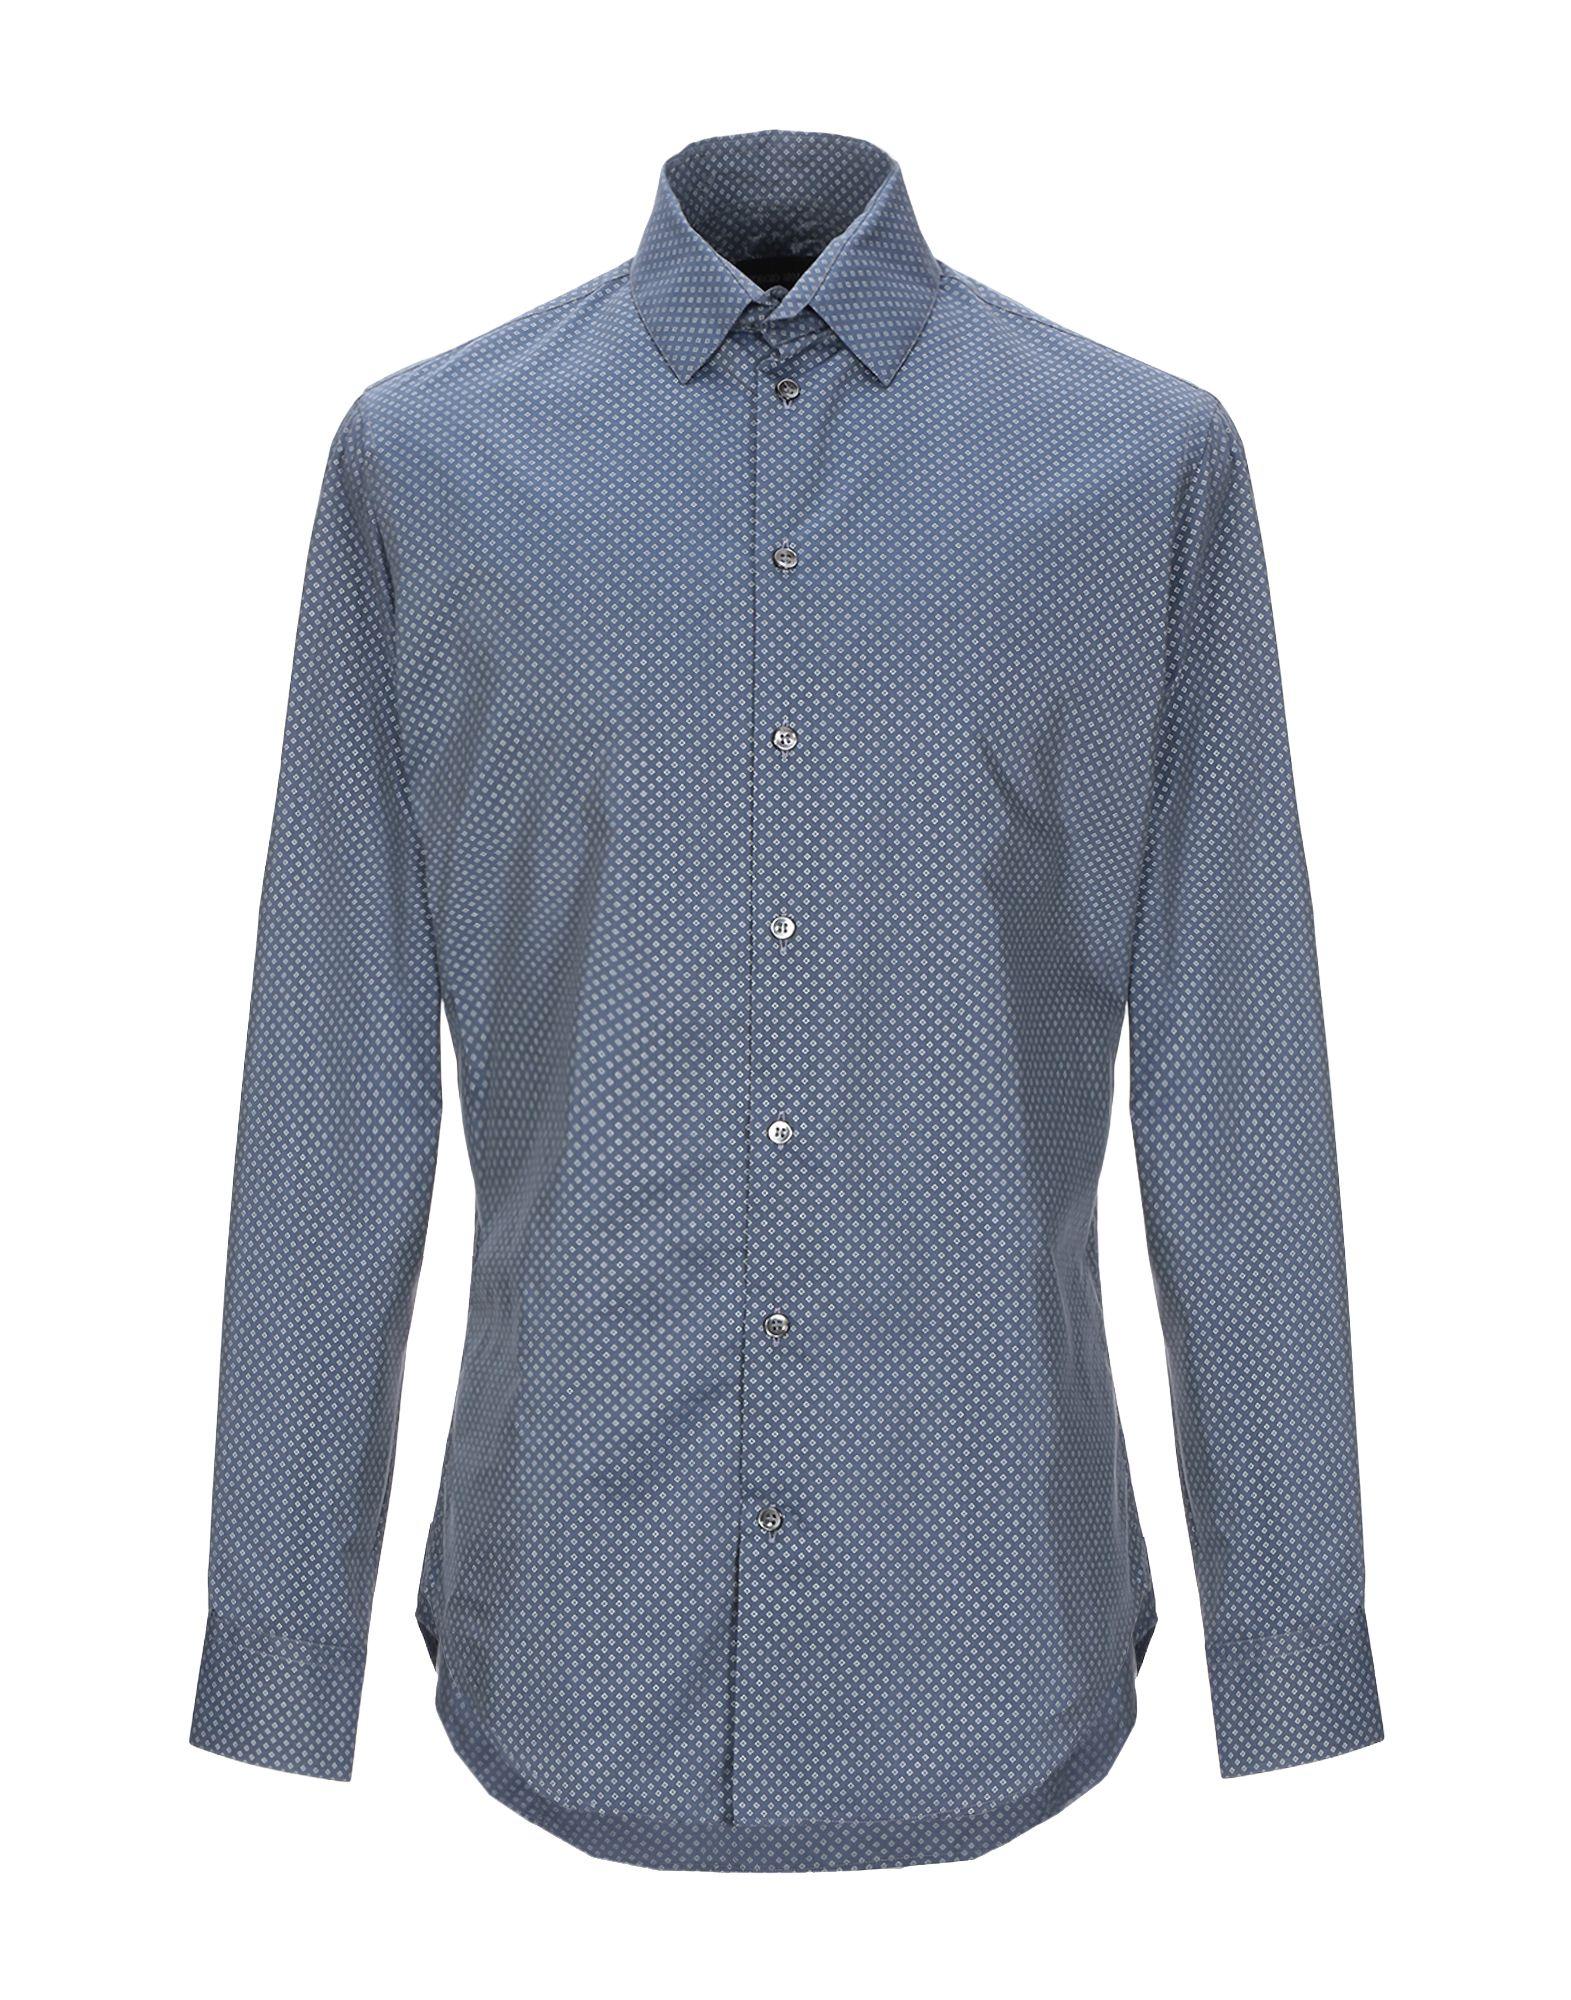 Giorgio Armani Cotton Shirt in Slate Blue (Blue) for Men - Lyst